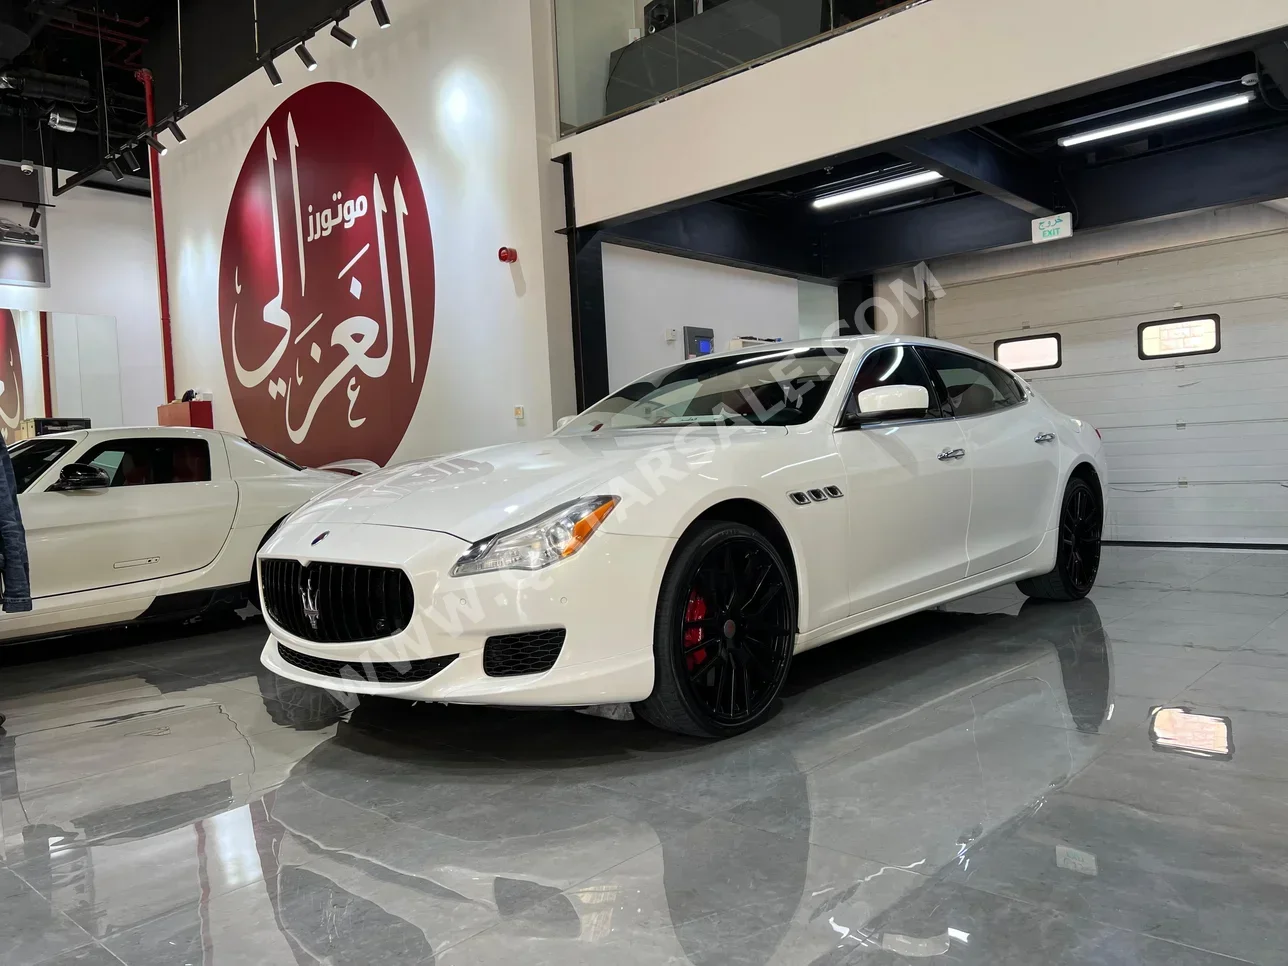 Maserati  Quattroporte  GTS  2015  Automatic  70,000 Km  8 Cylinder  Rear Wheel Drive (RWD)  Sedan  White